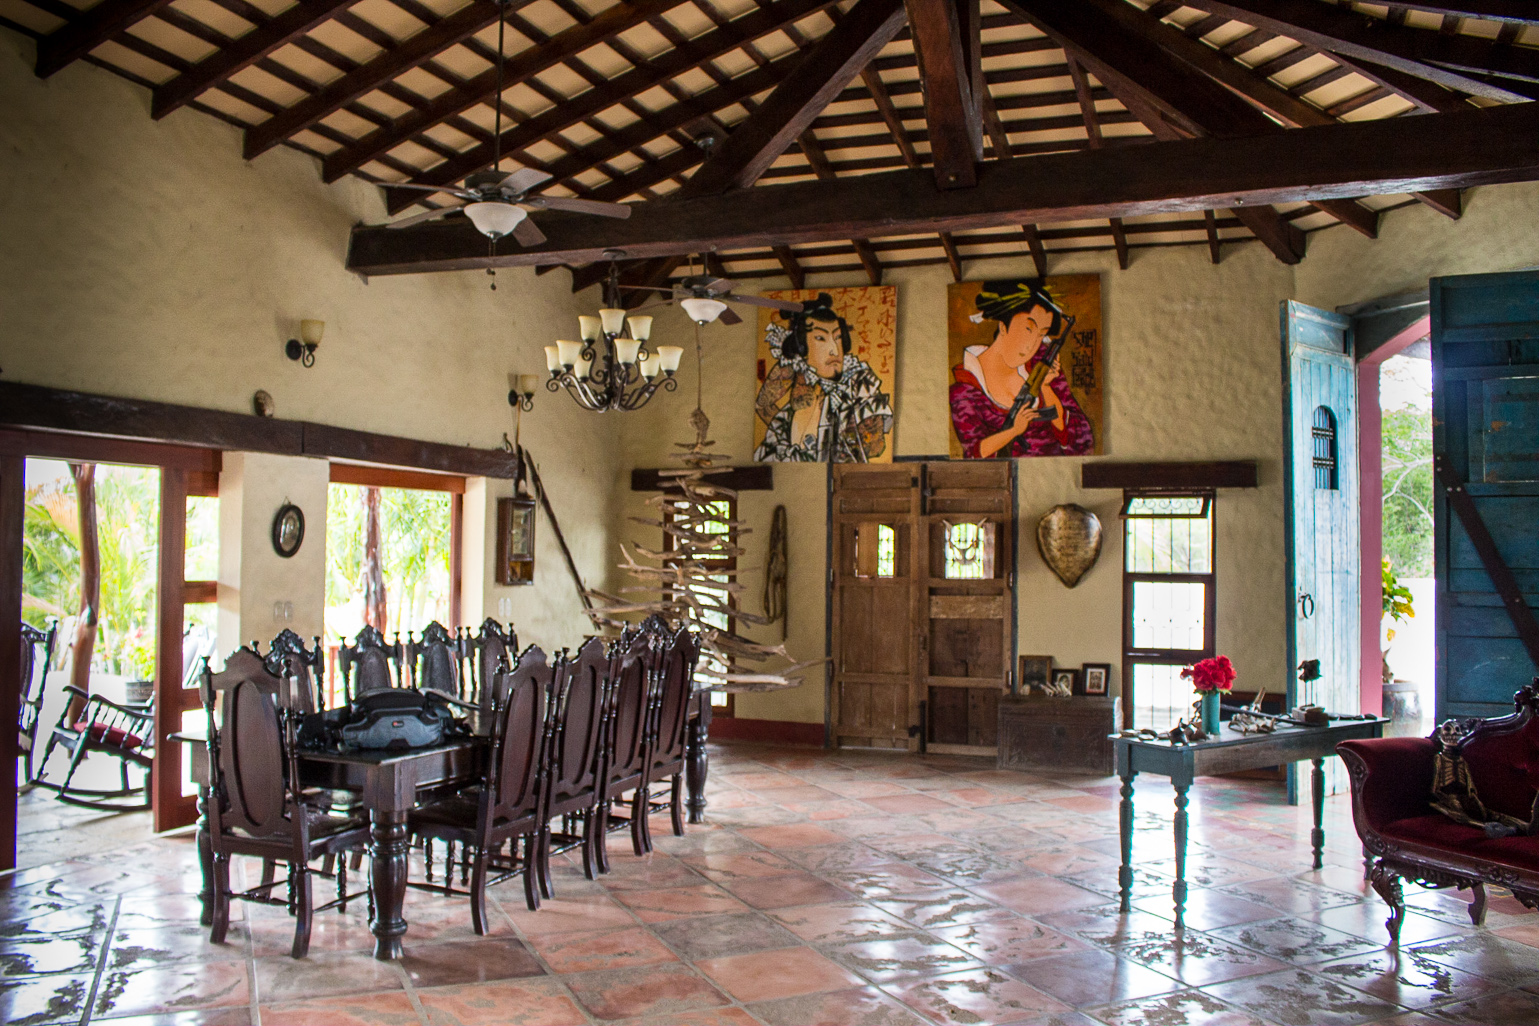 The main hall and dining room at Rancho Chilamate, Nicaragua